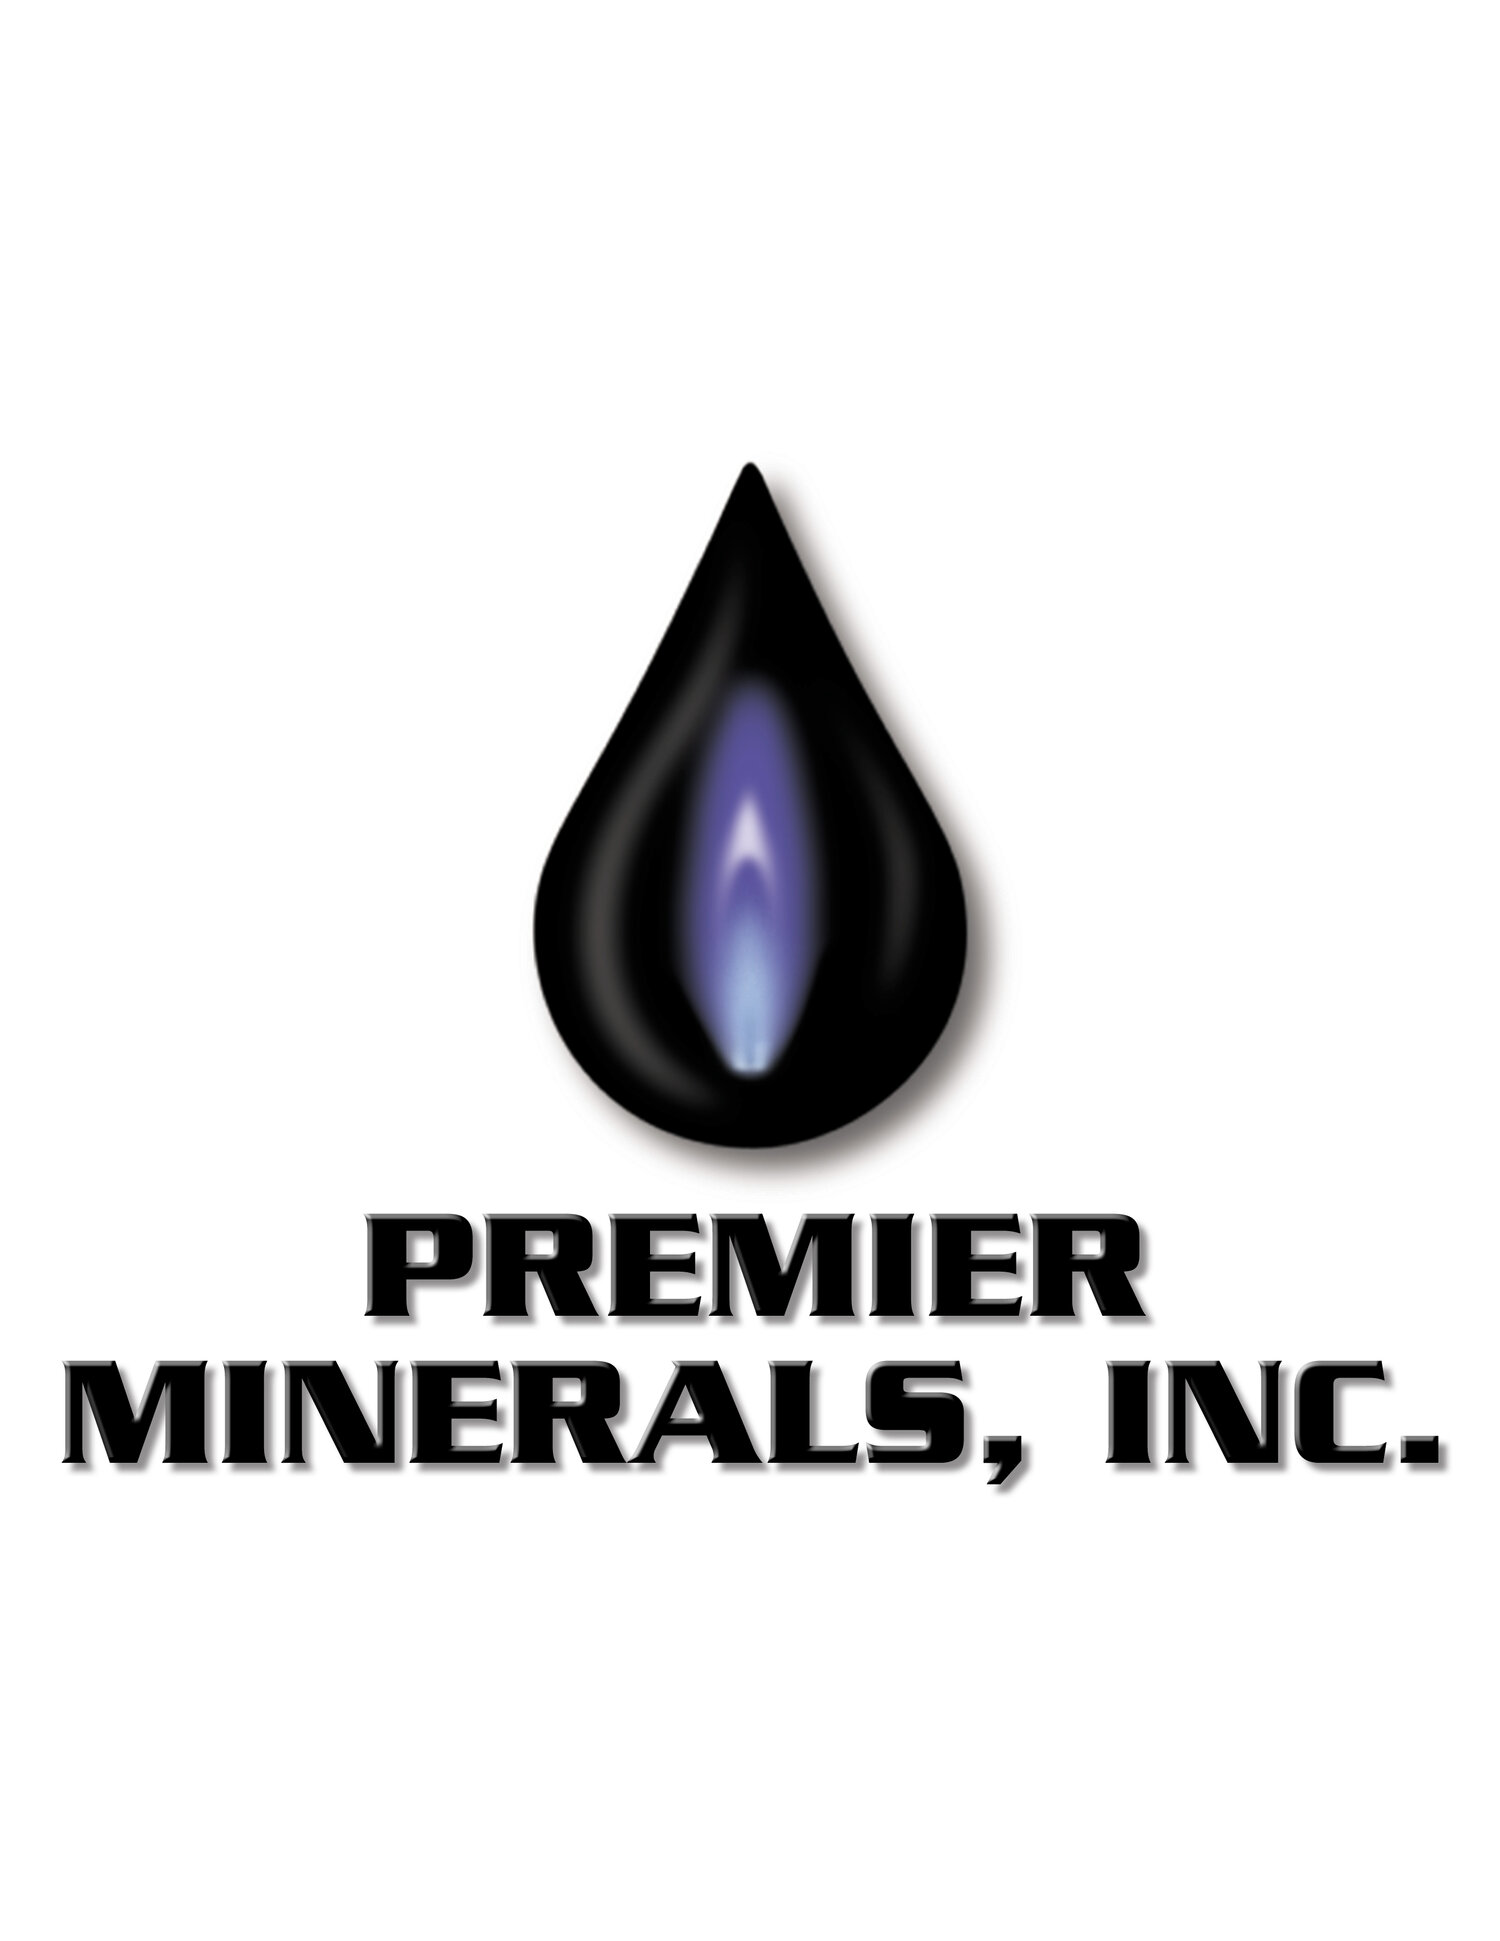 Premier Mineral Resources, LLC